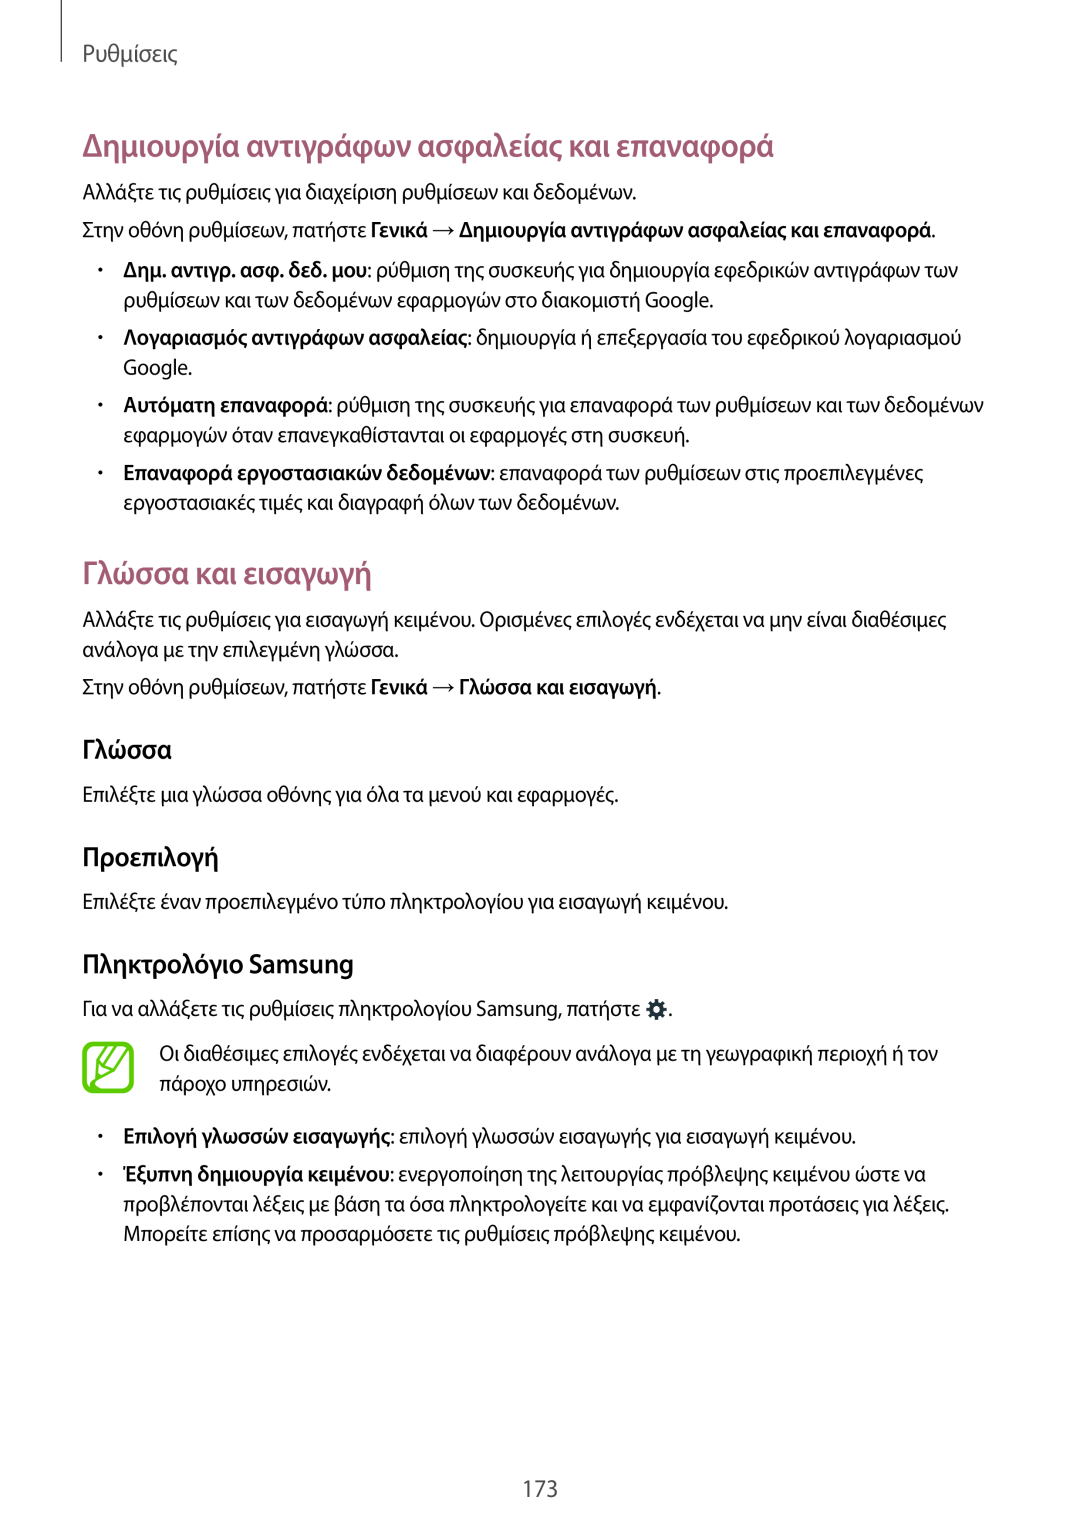 Samsung SM-T805NZWAEUR manual Δημιουργία αντιγράφων ασφαλείας και επαναφορά, Γλώσσα και εισαγωγή, Προεπιλογή, Ρυθμίσεις 